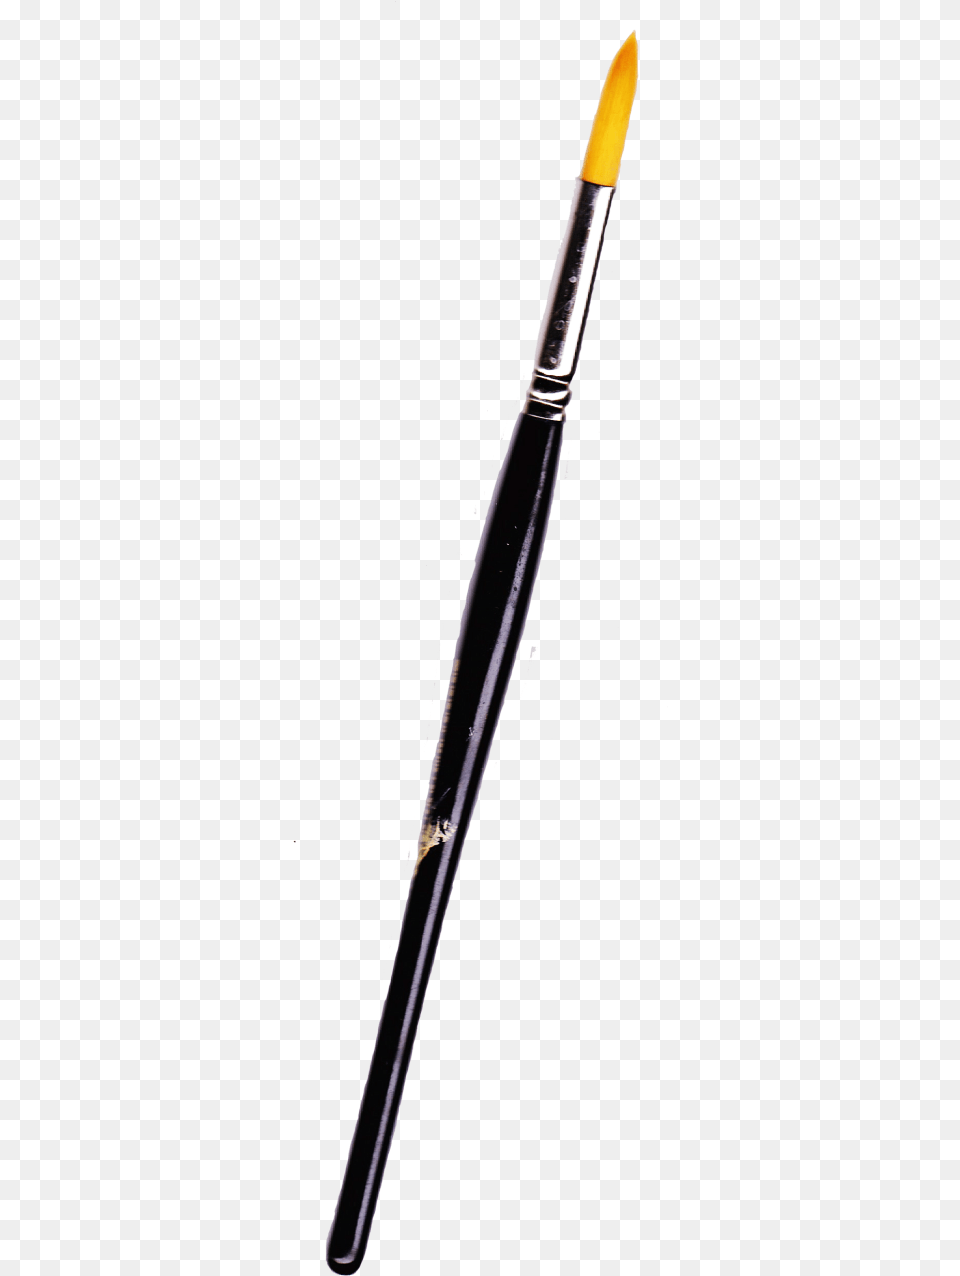 Pentel Arts Stylo Sketch Pen, Brush, Device, Tool, Blade Free Transparent Png